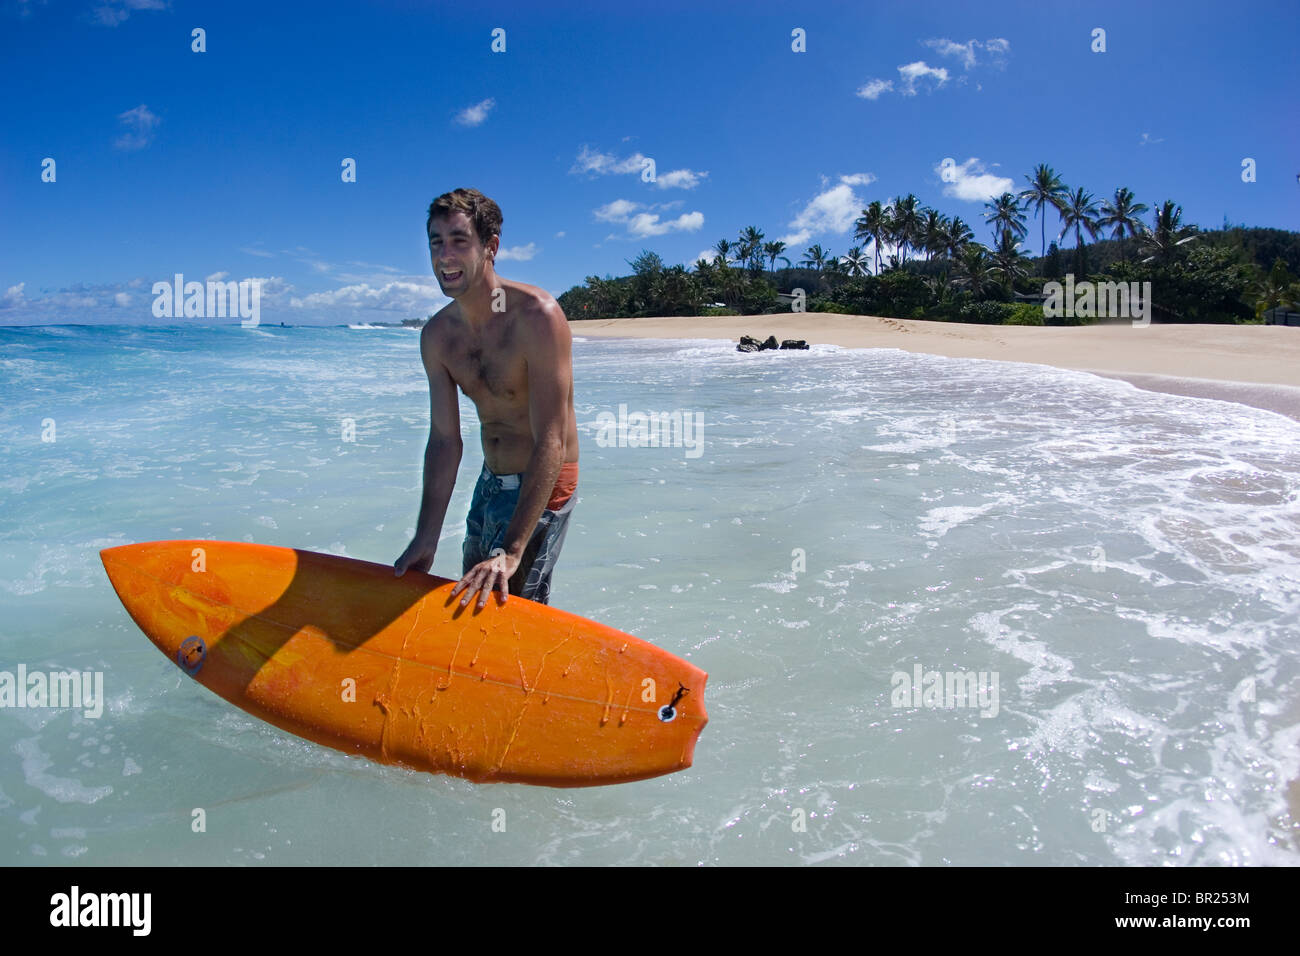 man with surfboard in Hawaii Stock Photo - Alamy